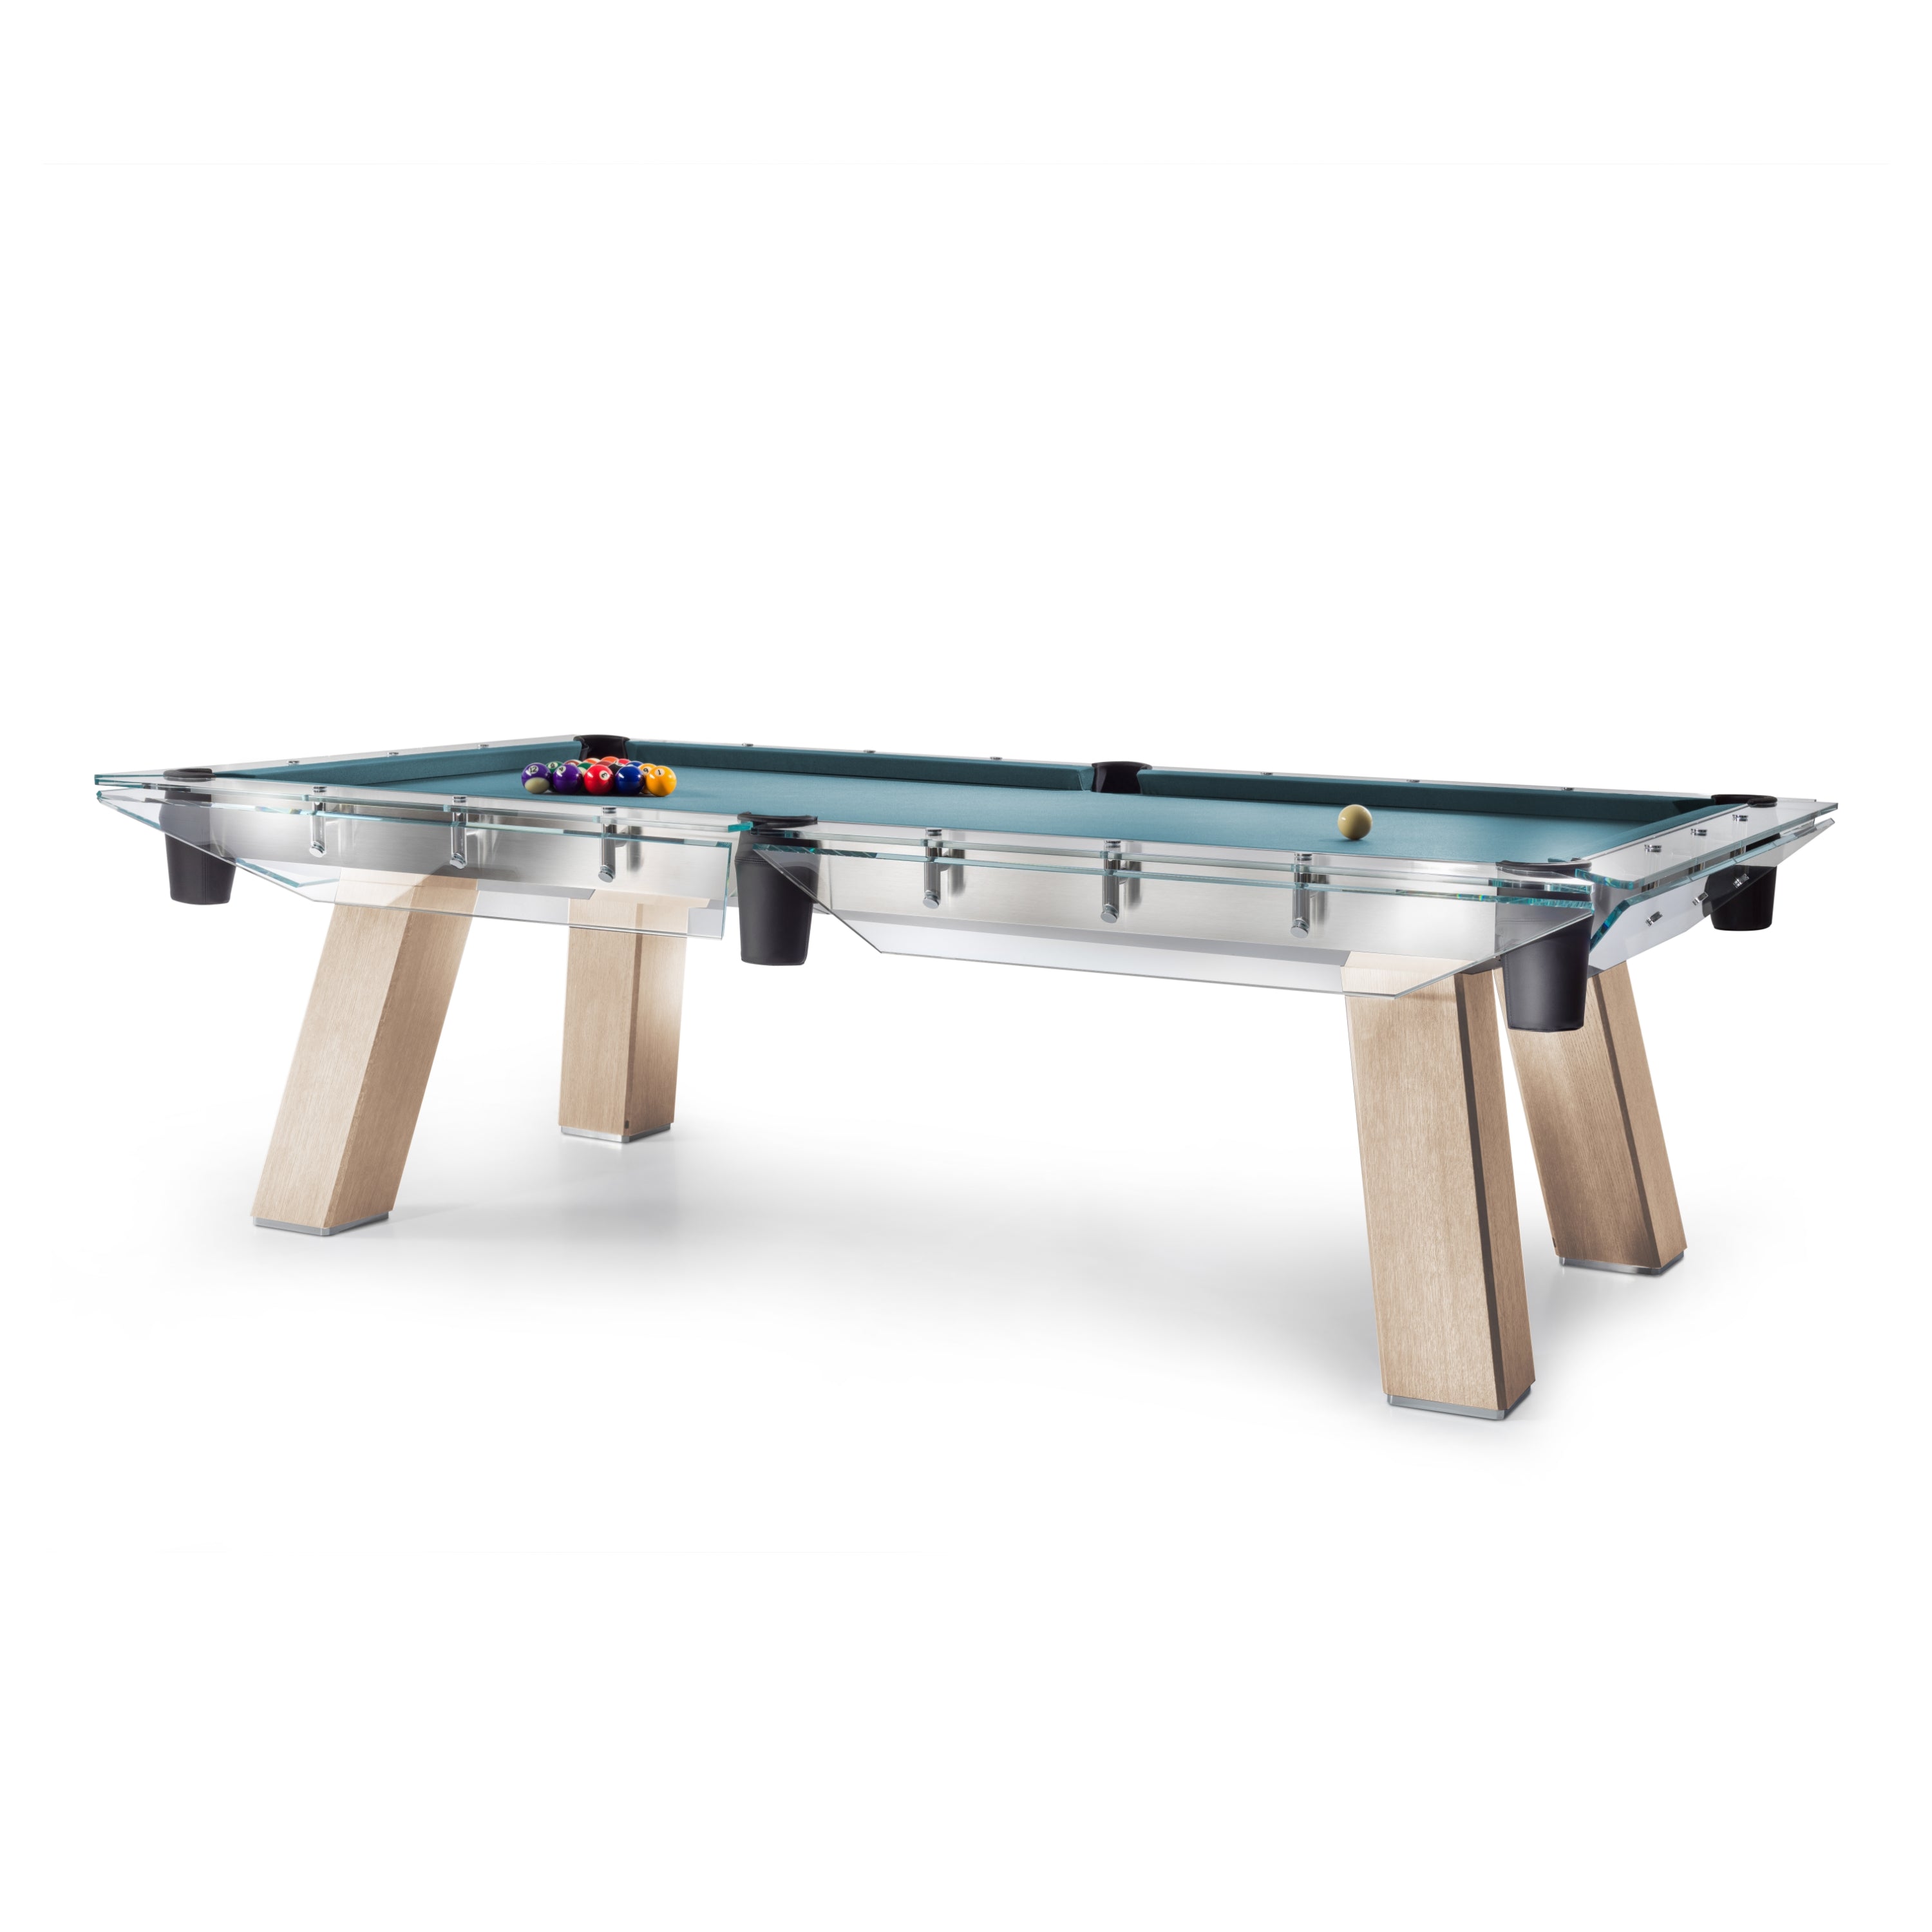 Filotto Wood Billiard Table